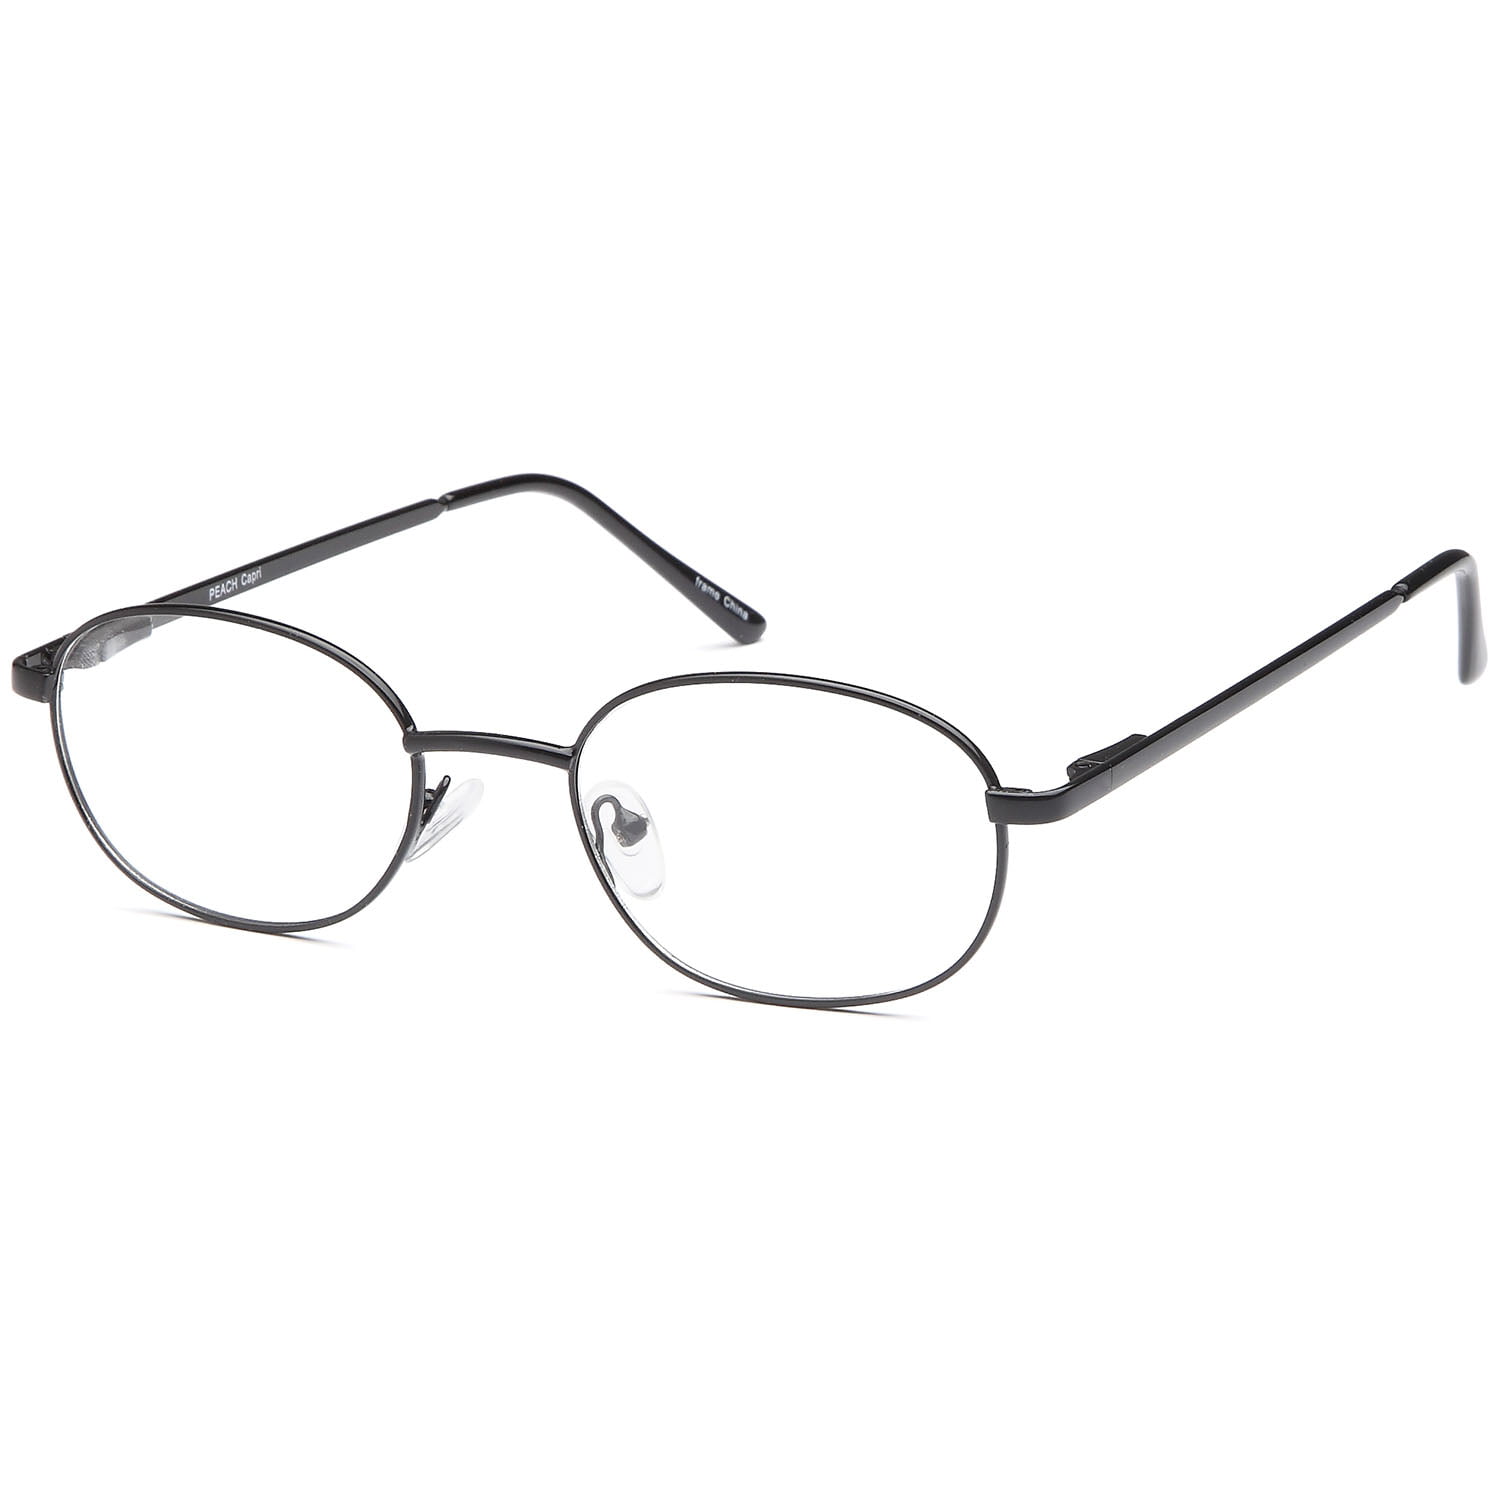 Men's Eyeglasses 50 19 140 Black Metal Generic Brand - Walmart.com